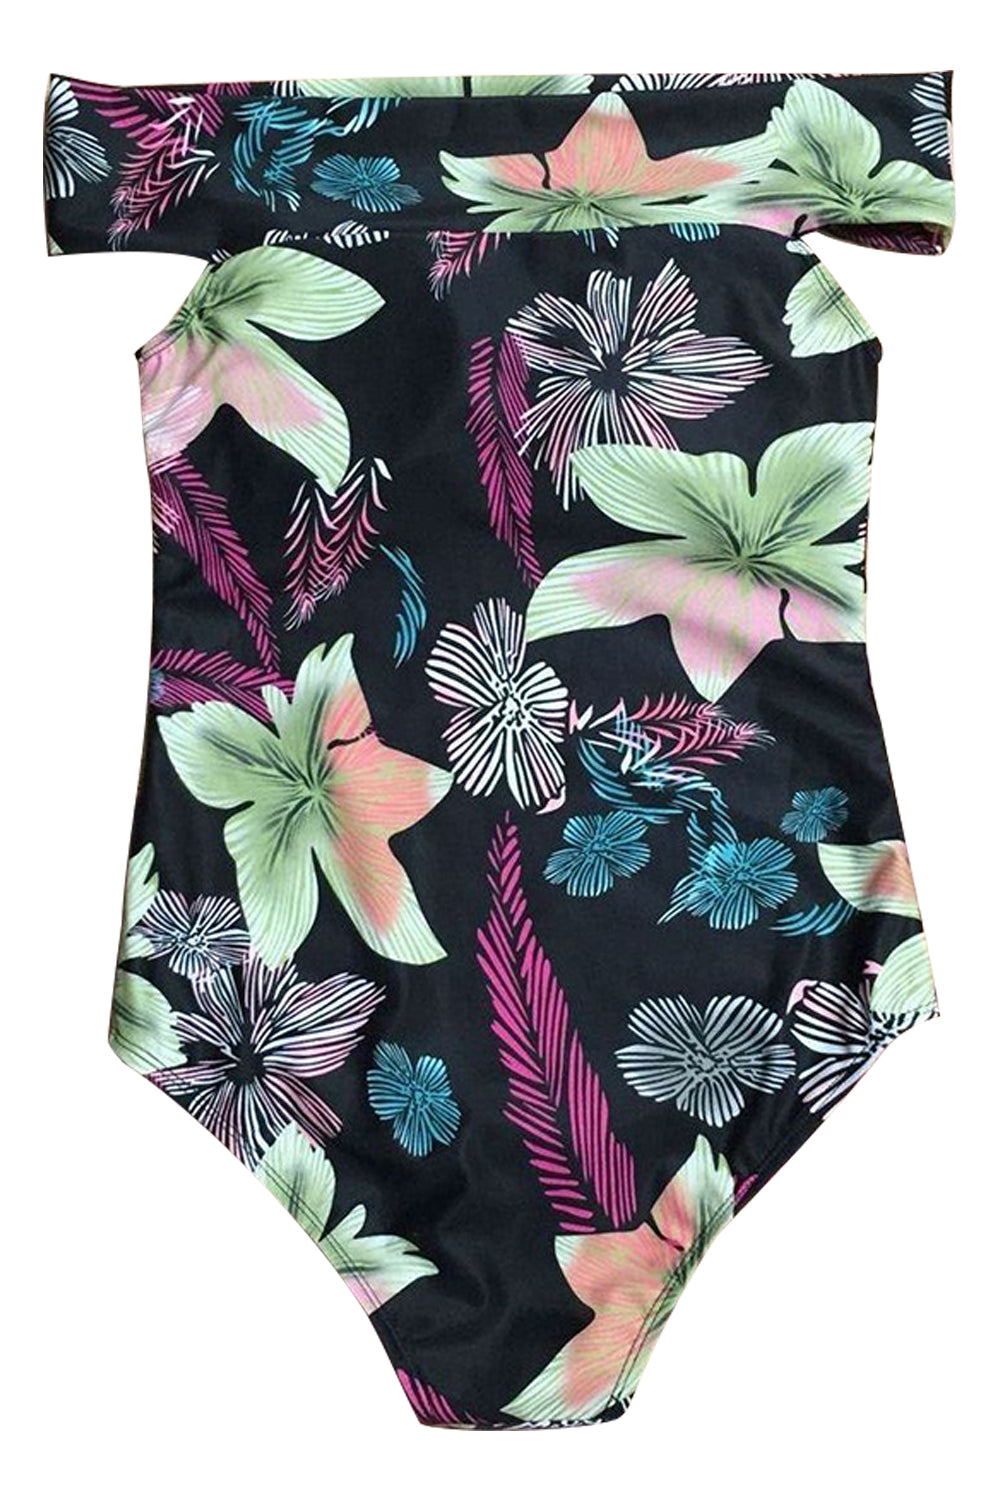 Iyasson Black Floral Printing Off-shoulder Design One-piece Swimsuit